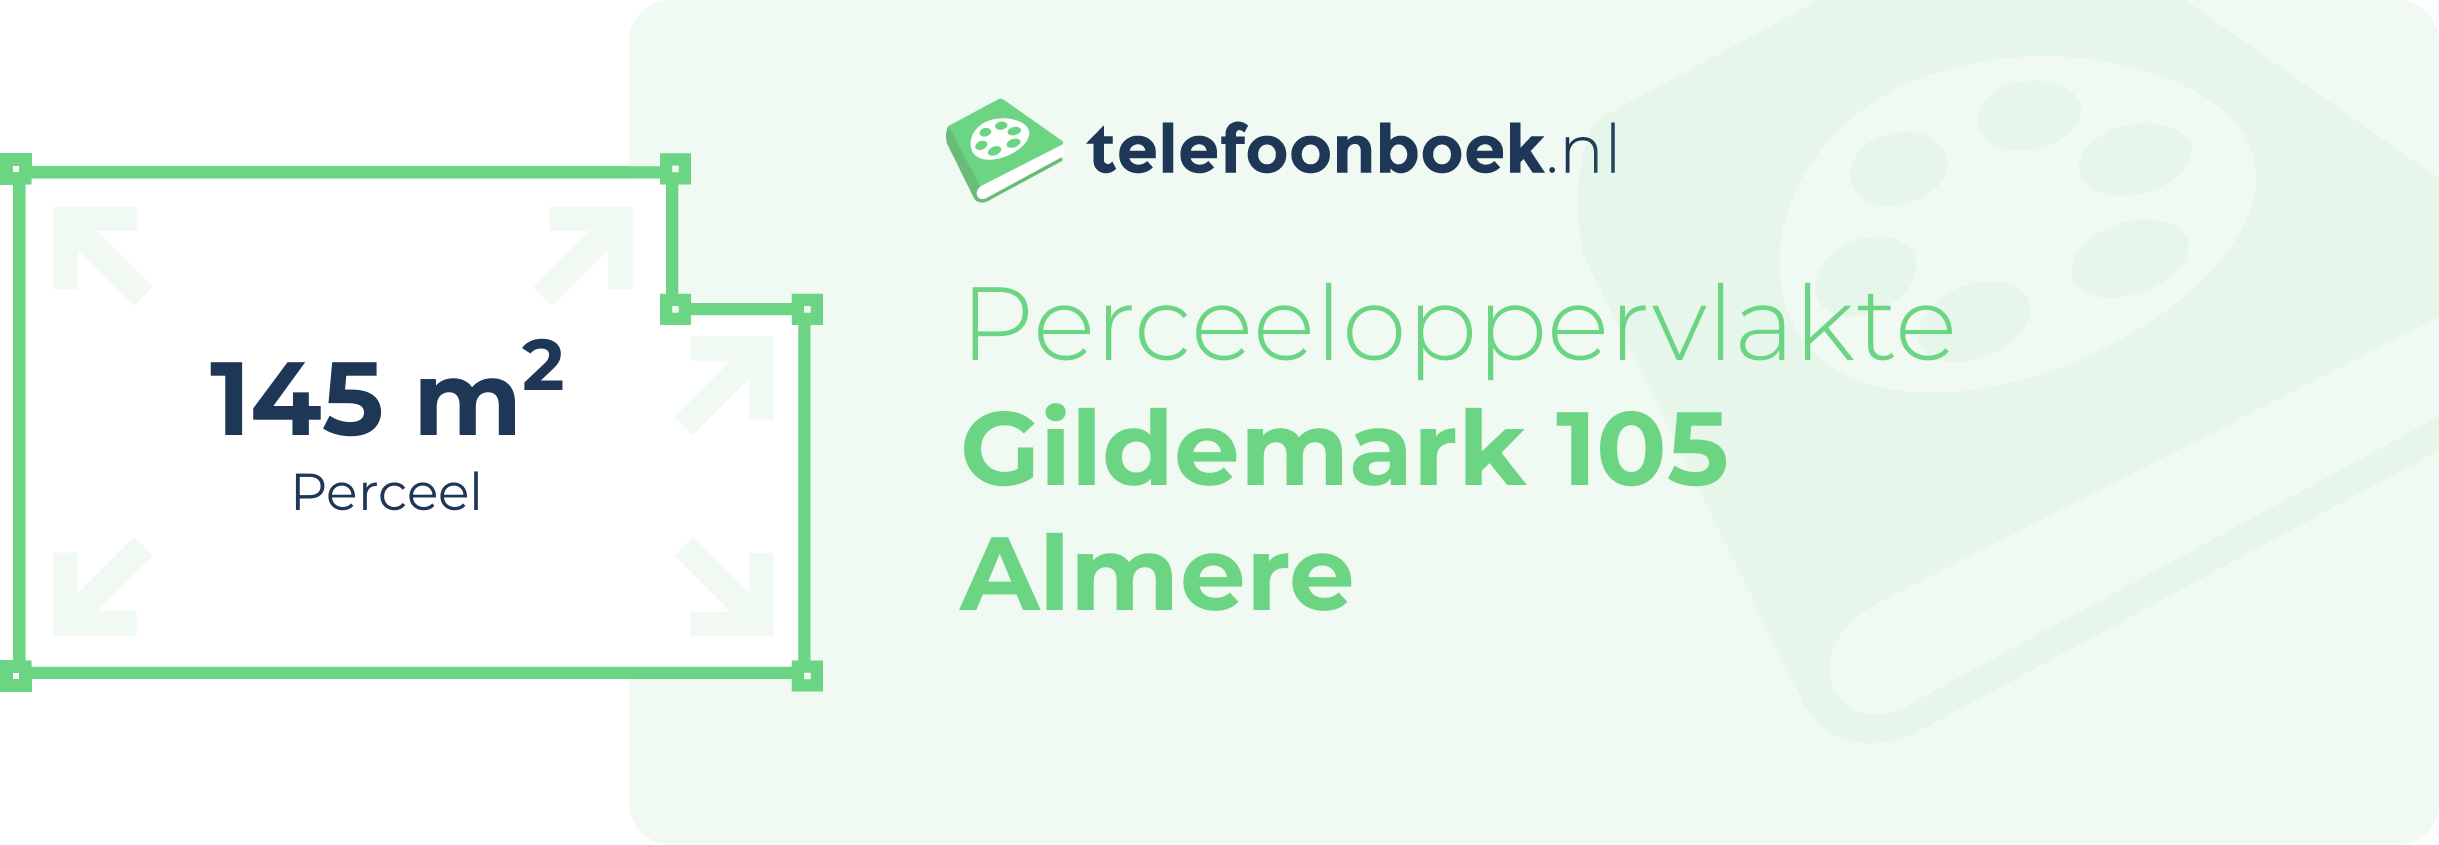 Perceeloppervlakte Gildemark 105 Almere